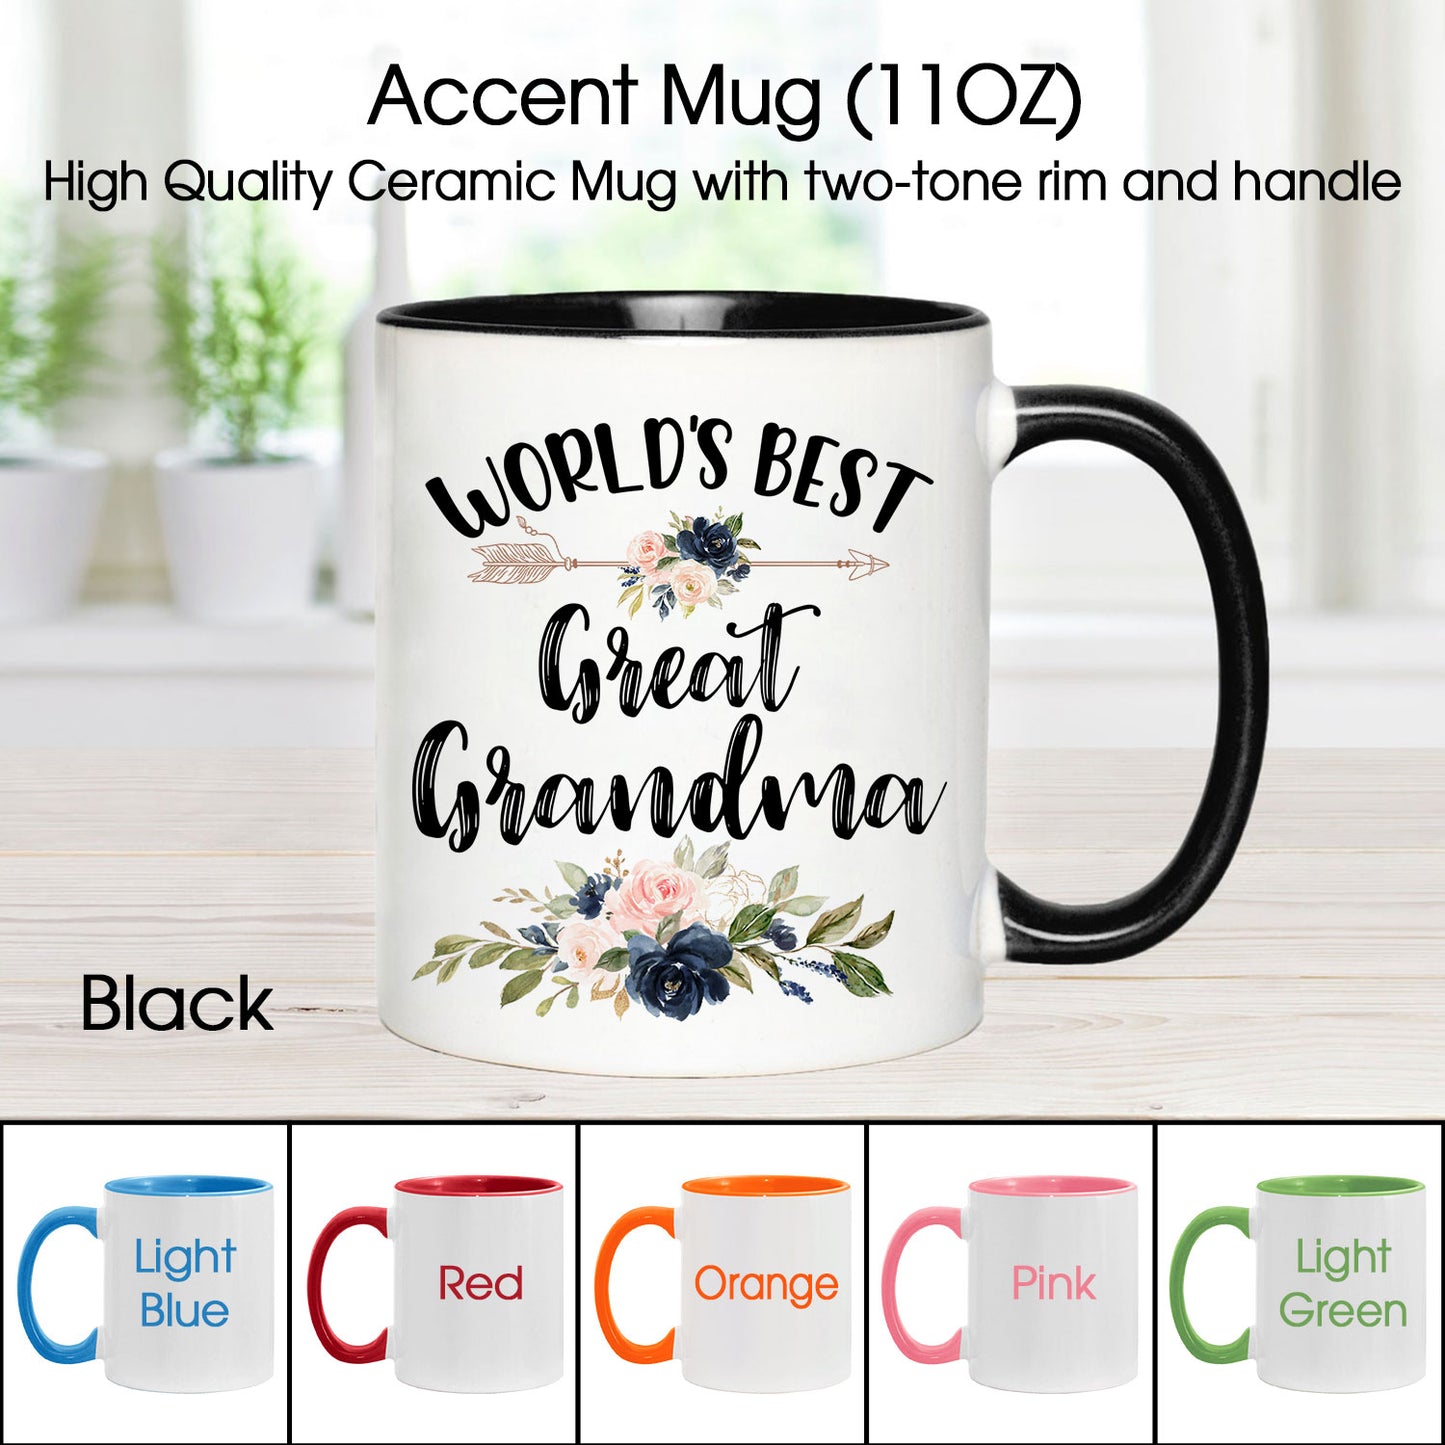 World’s Best Great Grandma Custom Mug With Your Photo, Name & Date